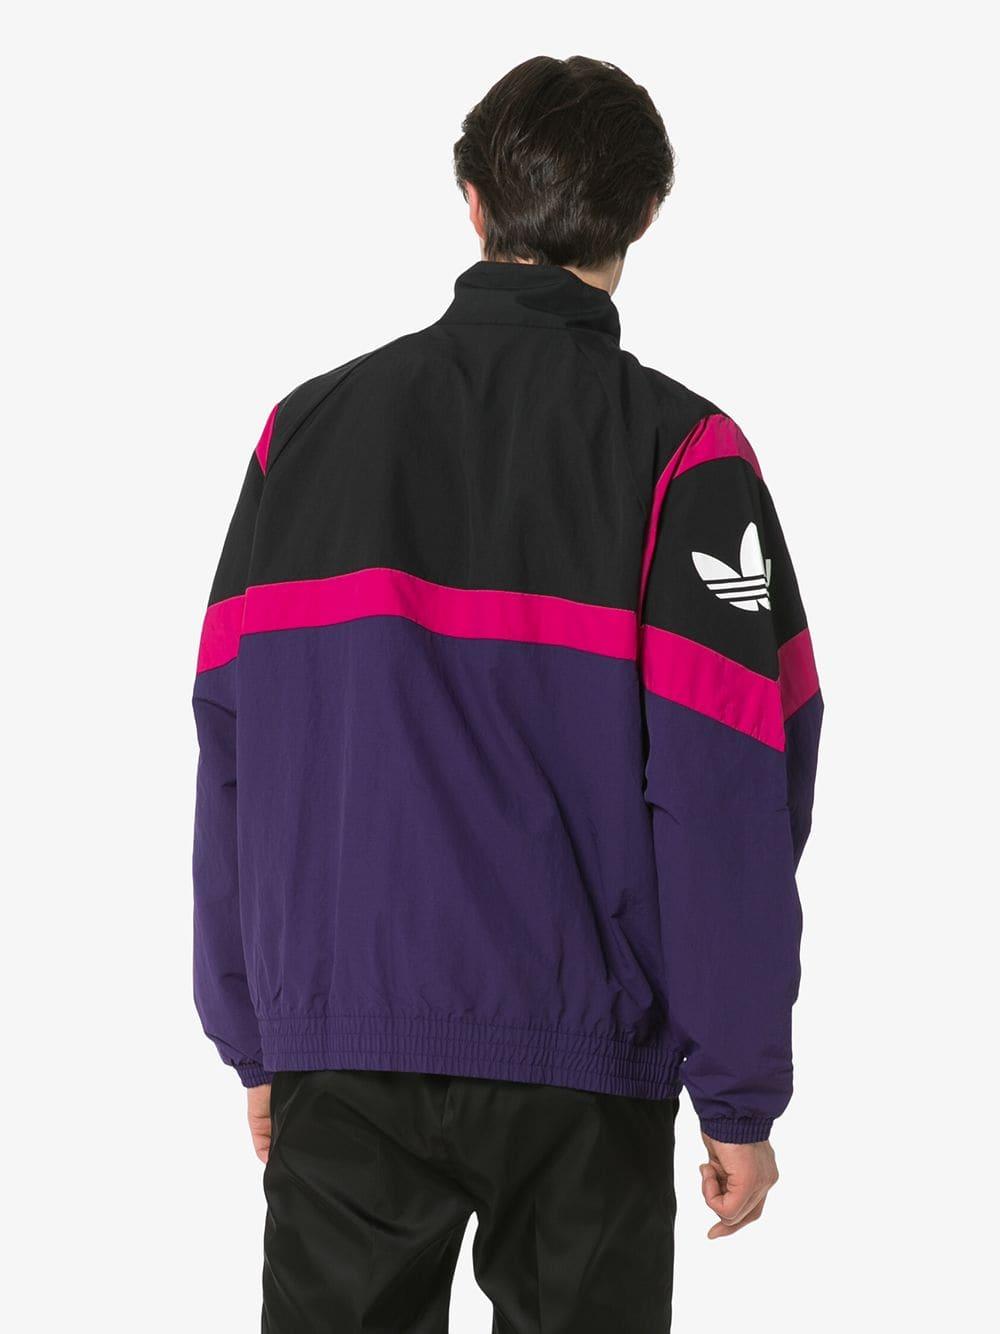 black adidas jacket with purple stripes